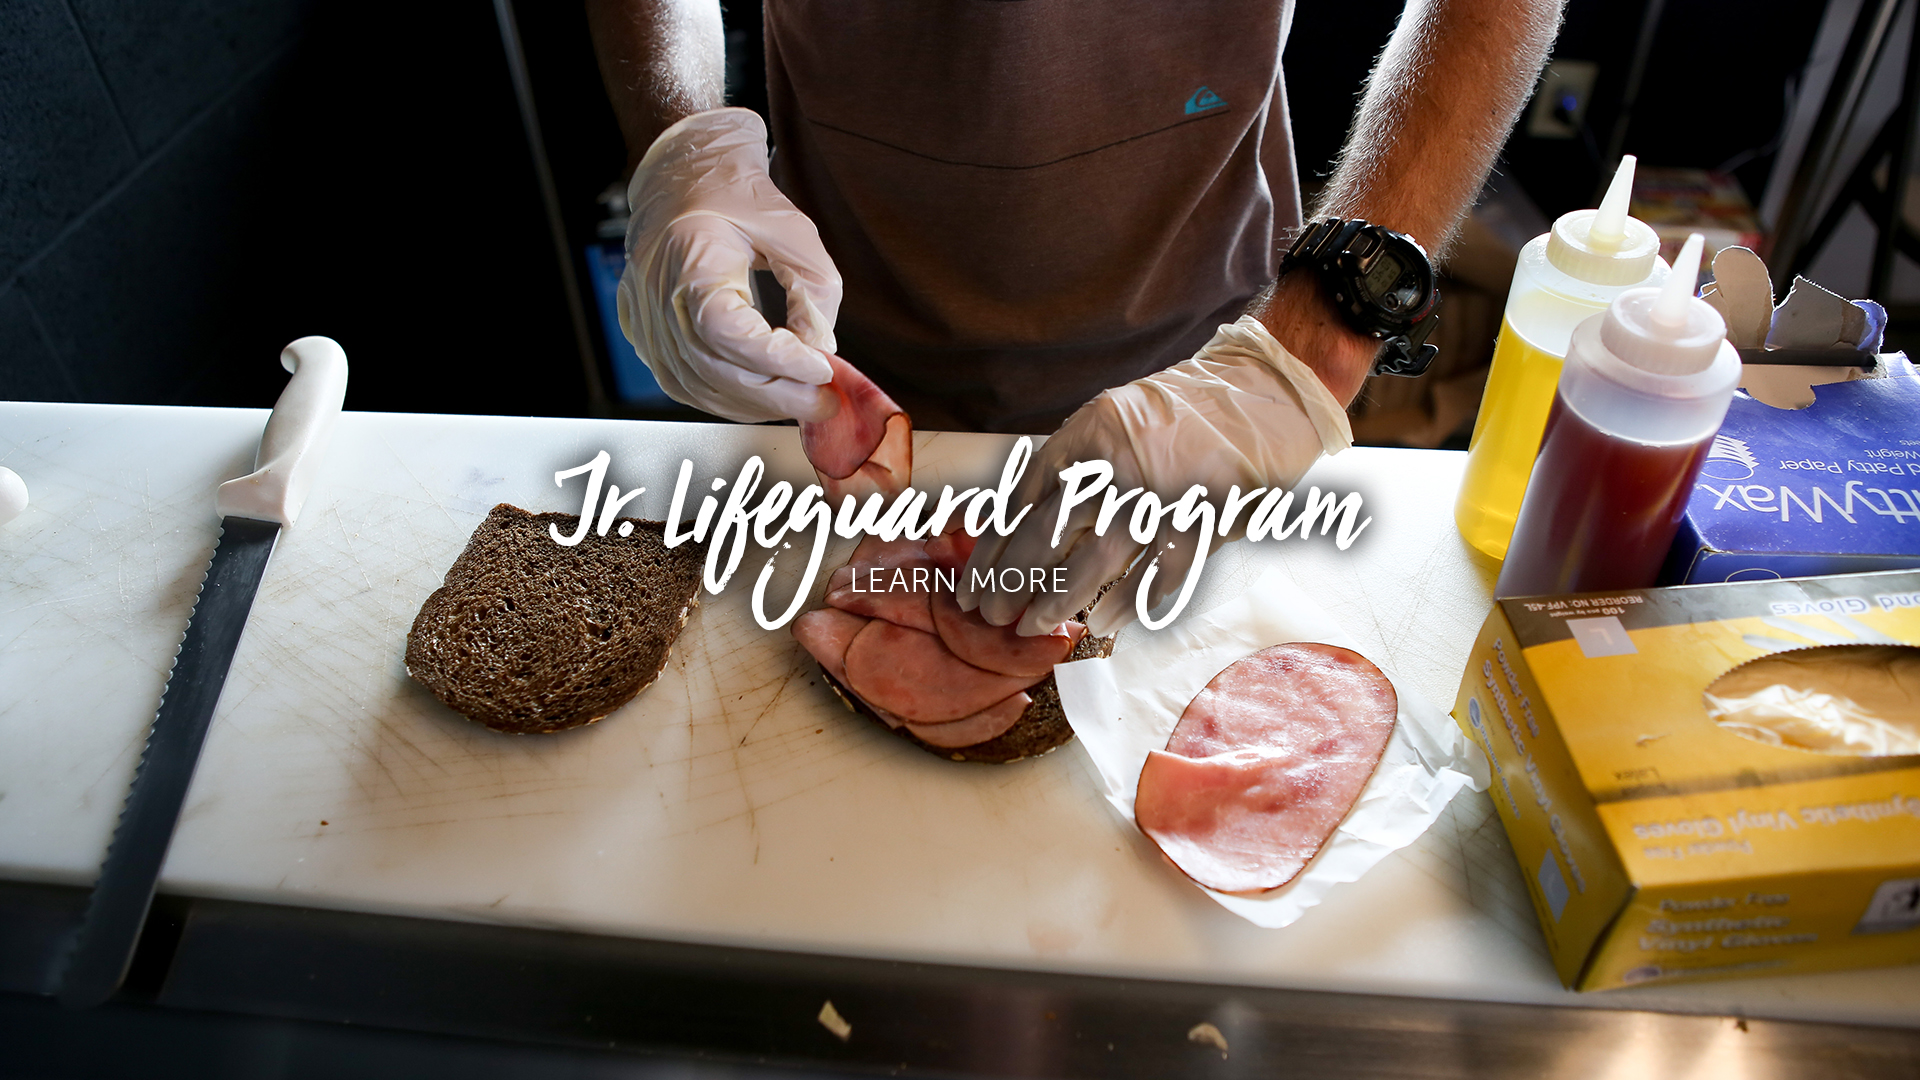 Jr. Lifegaurd Program